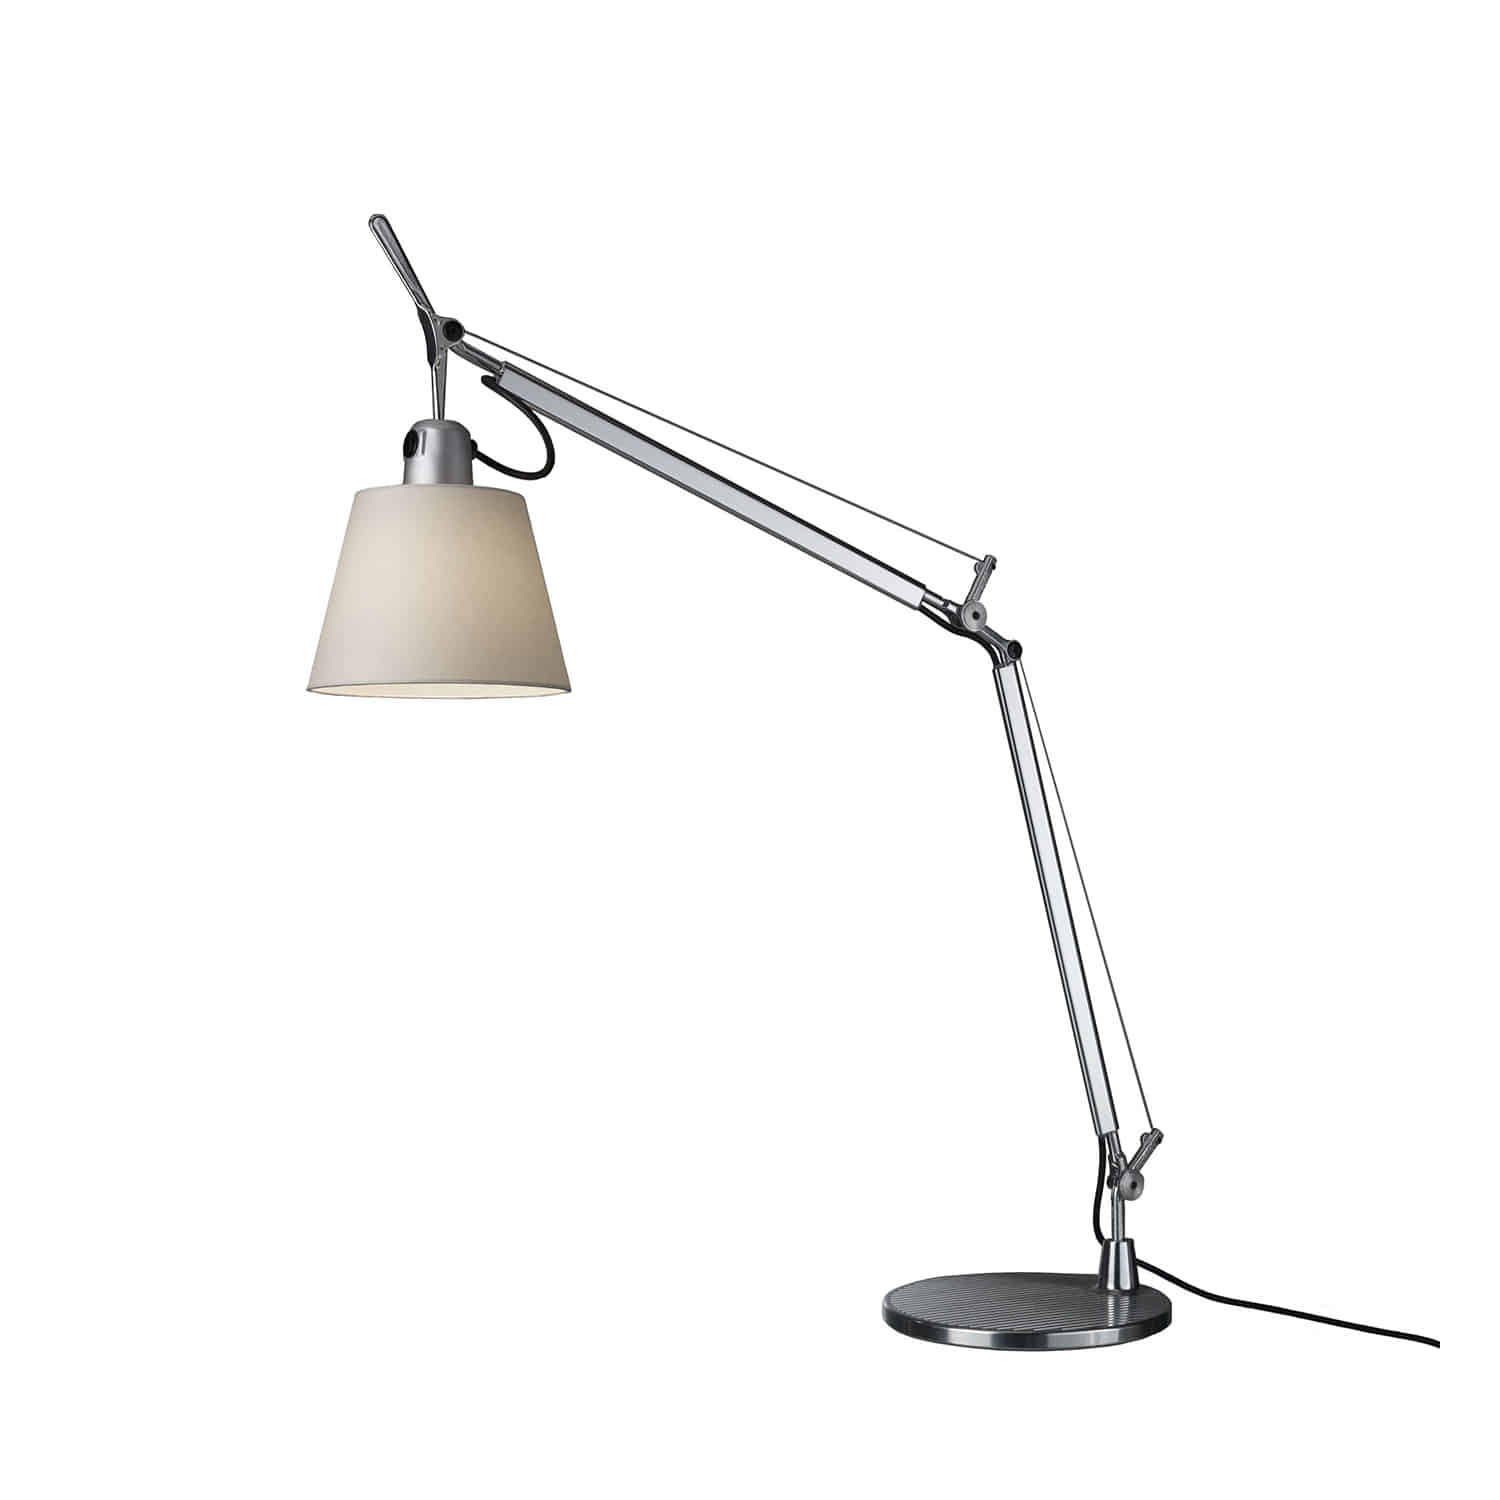 Tolomeo Basculante Table Lamp